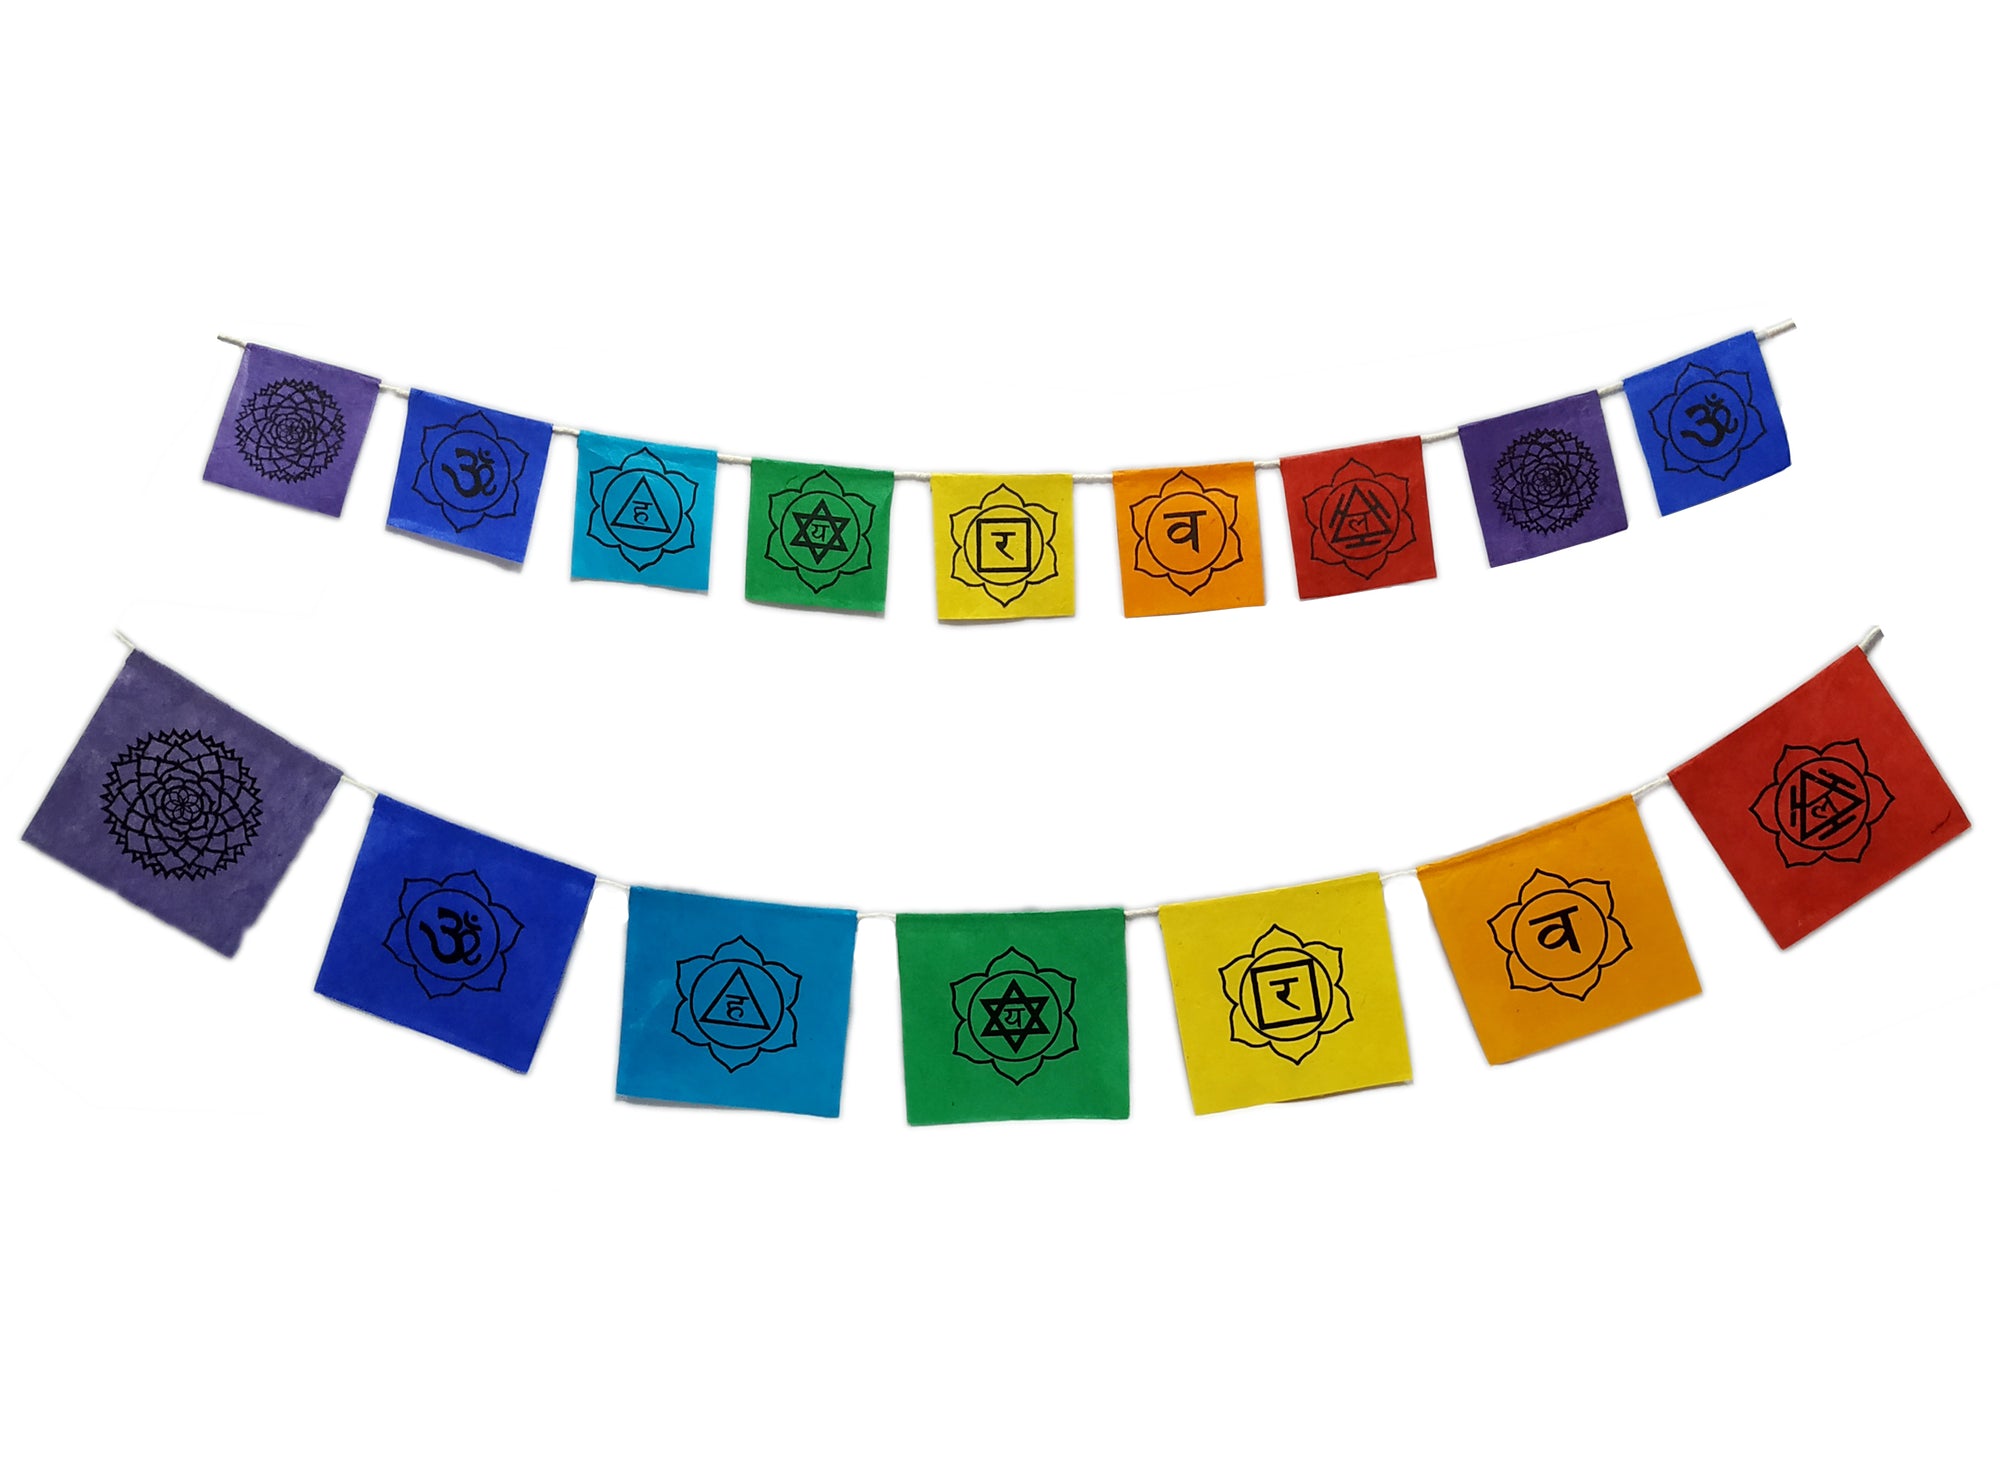 7 Chakra Prayer Flags (Buy 1 Get 1 Free)